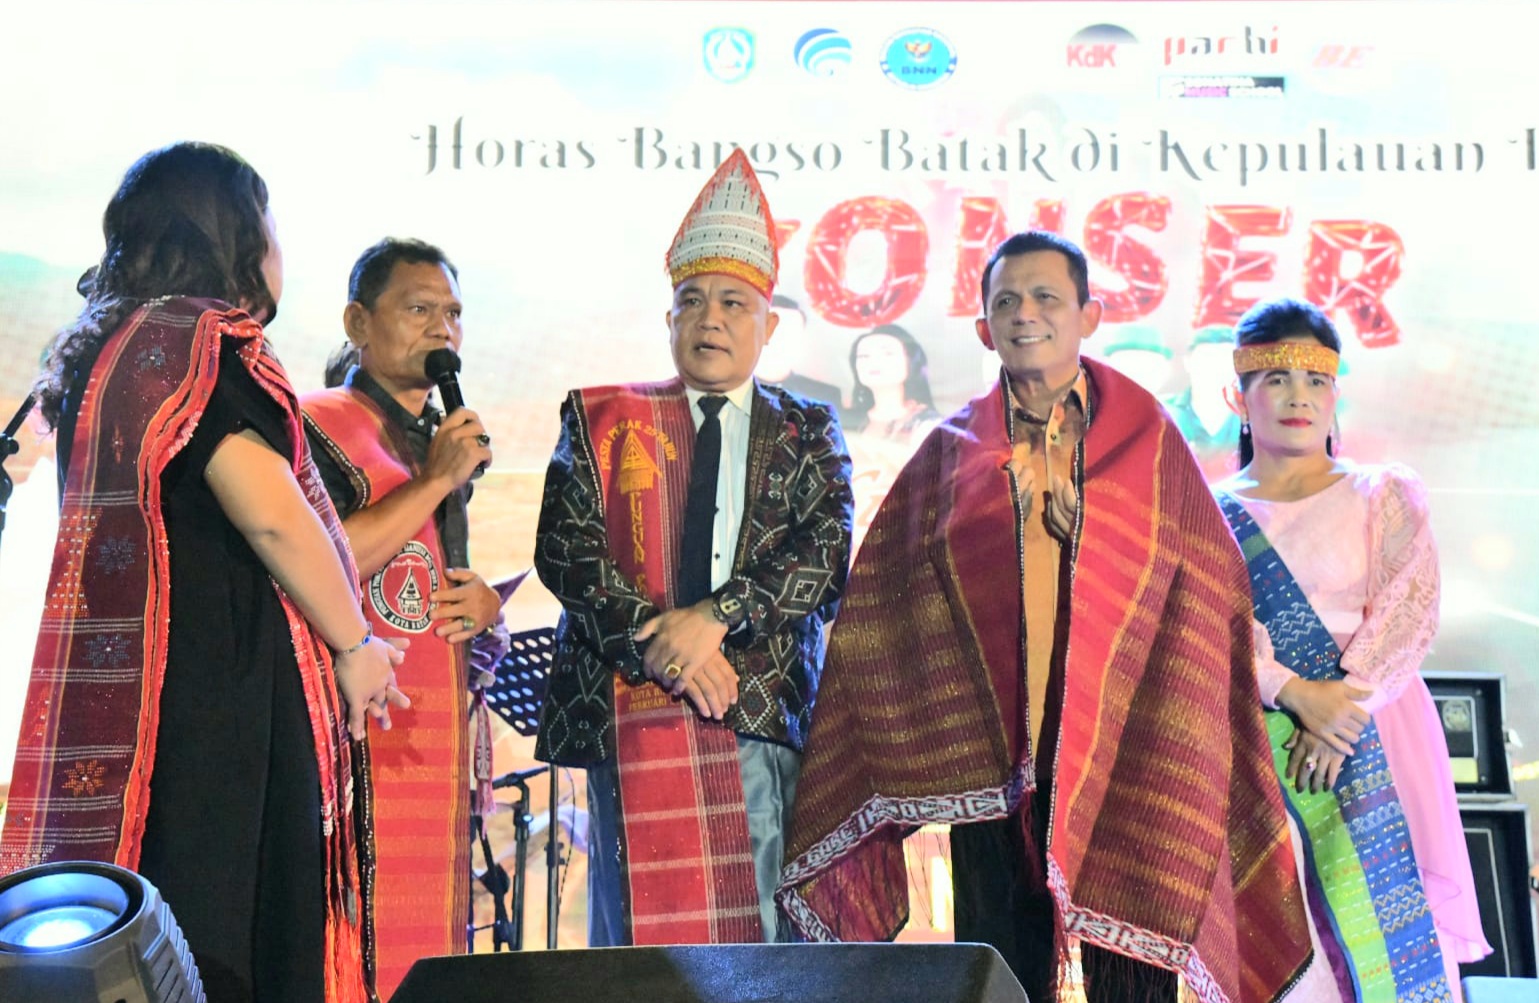 Gubernur Ansar Hadiri Konser Musik Batak Batam